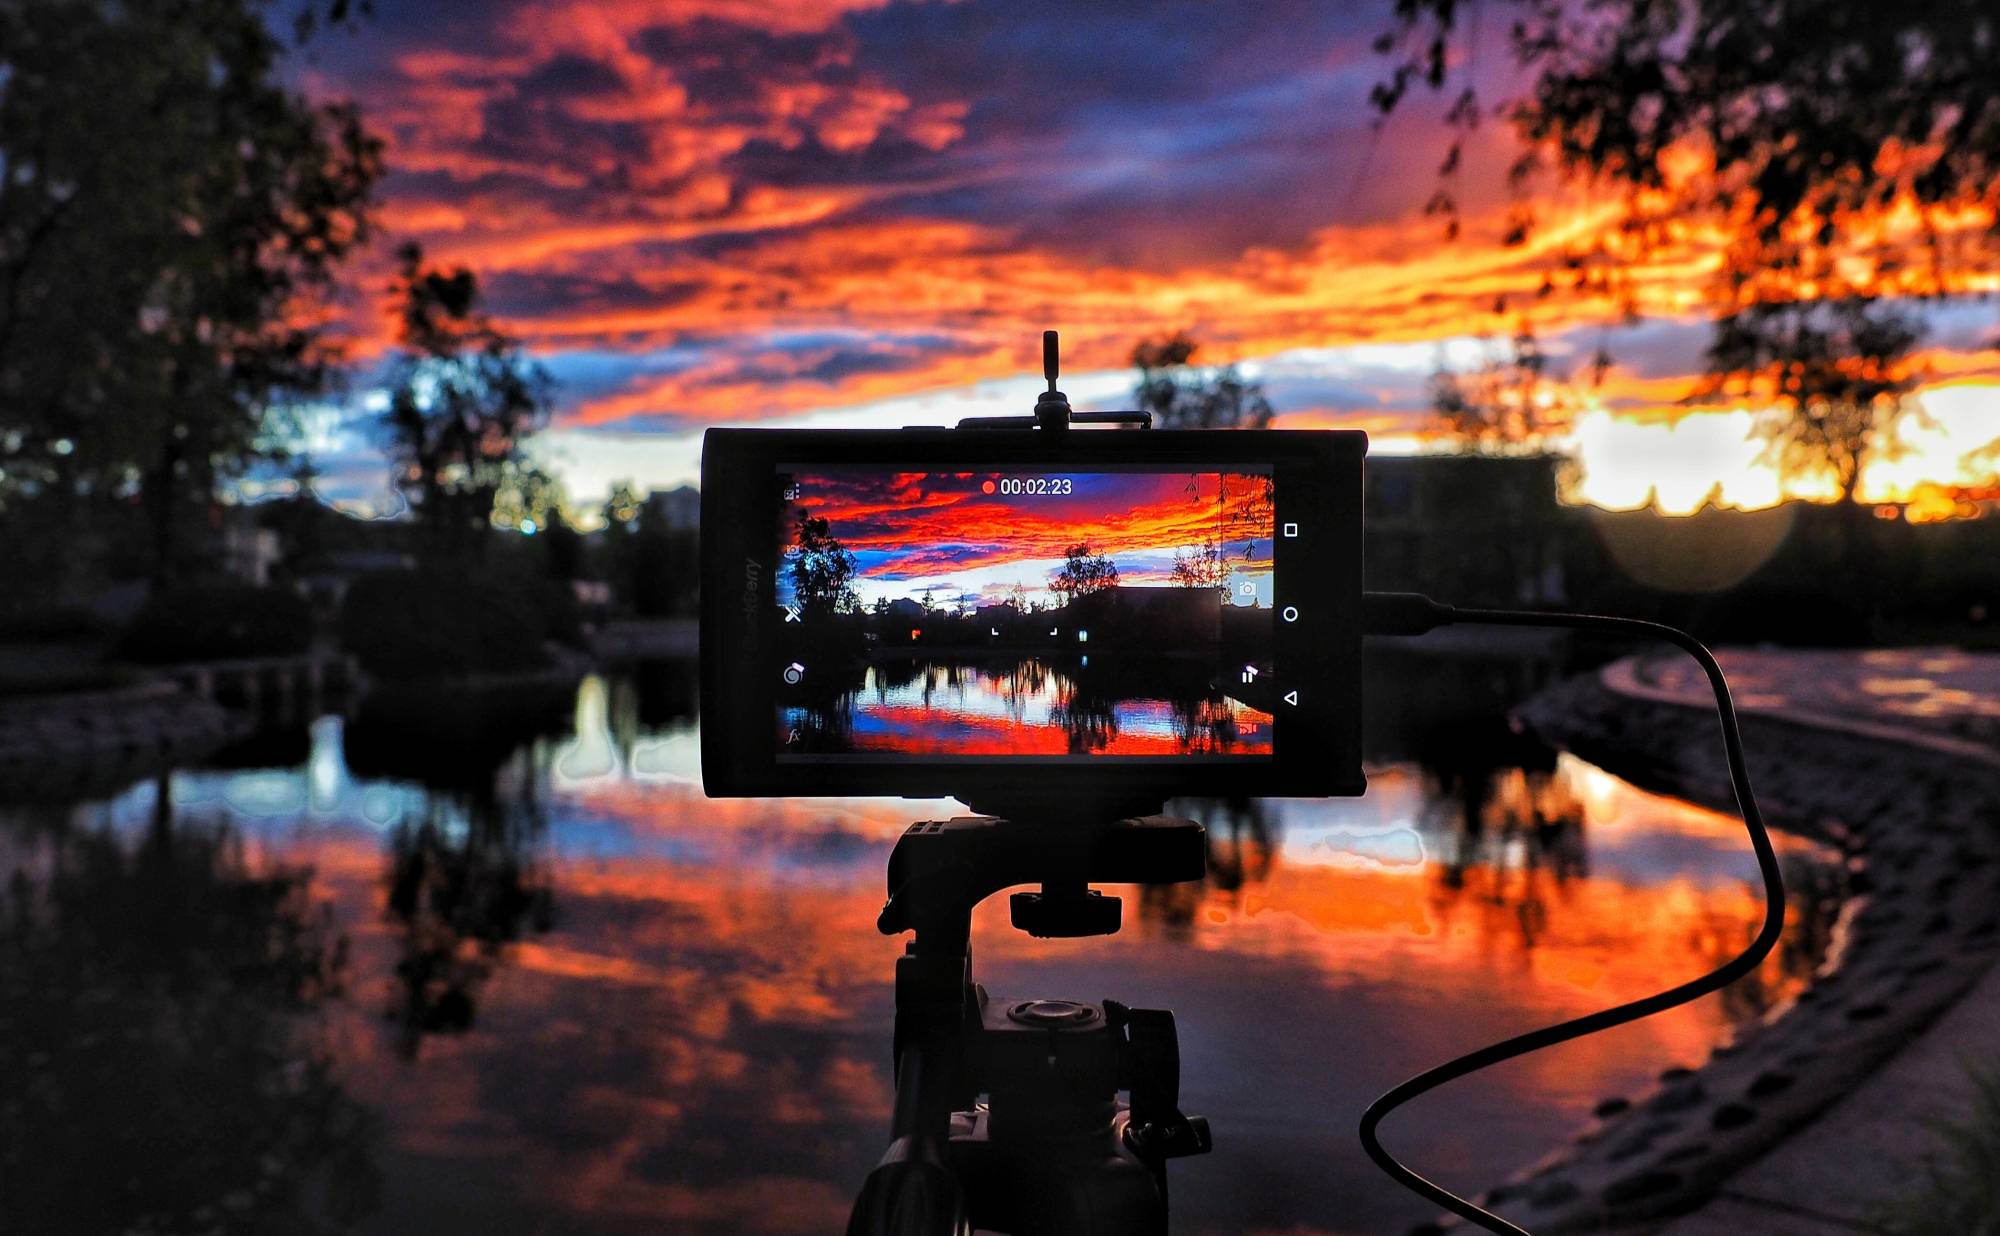 Camera on tripod setup during golden hour